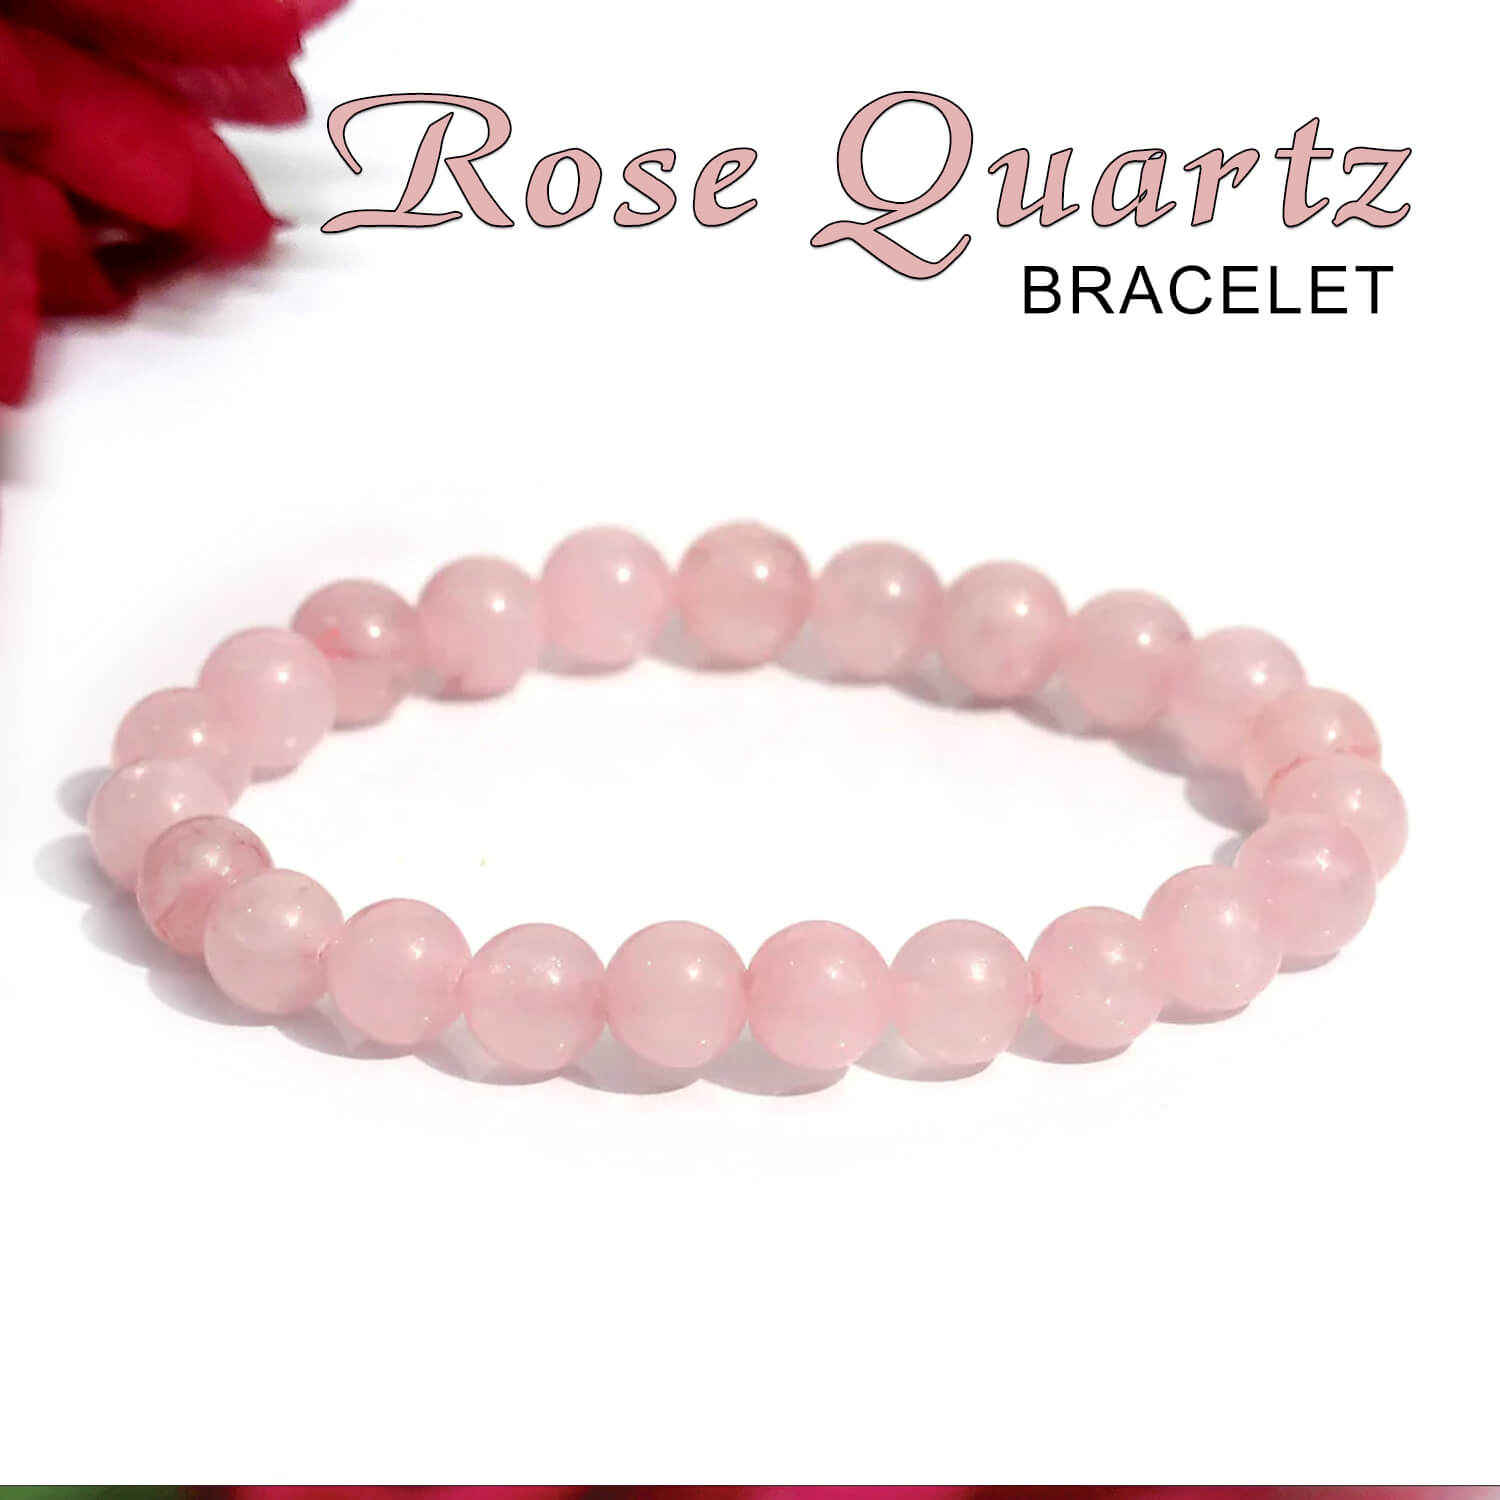 Rose Quartz Bracelet – Studd Muffyn